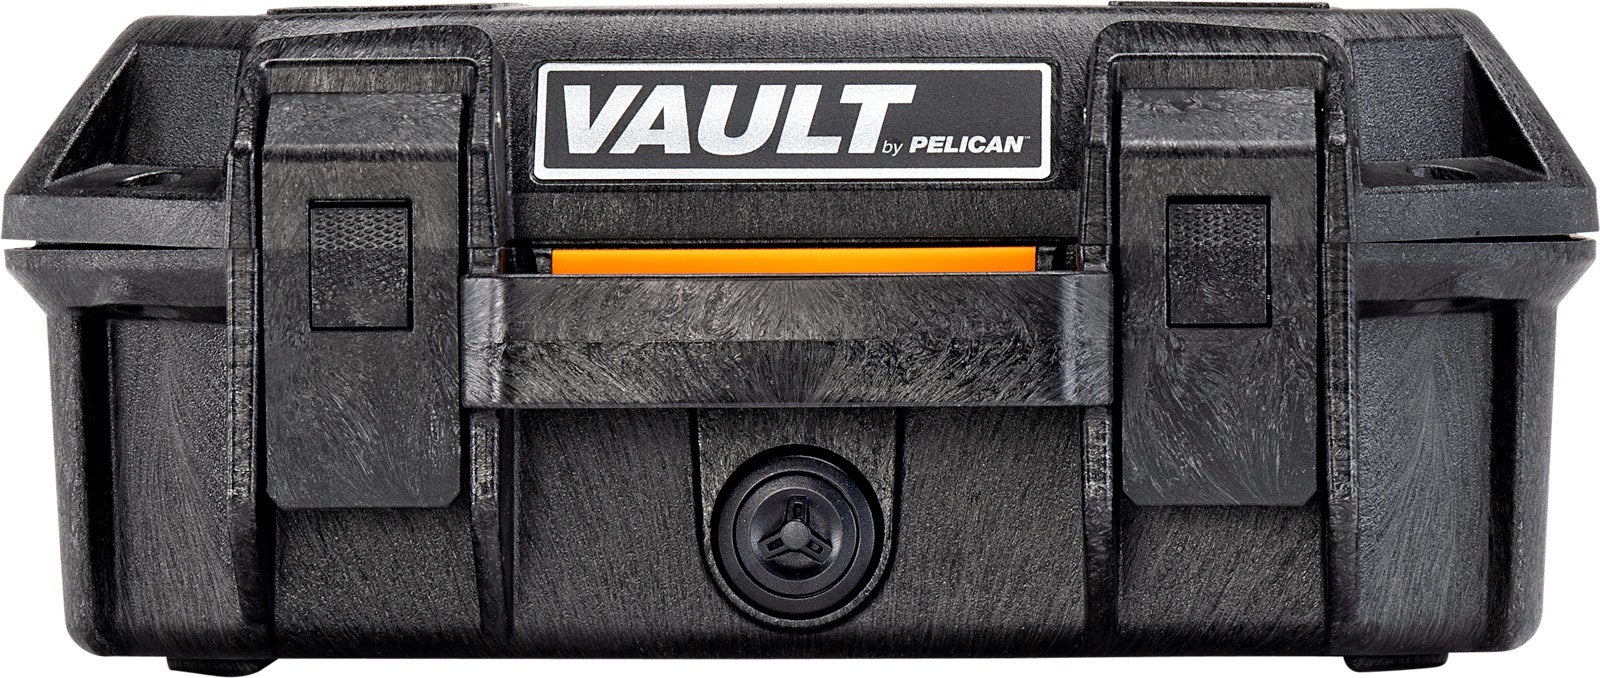 Rugged, Secure, Affordable - New V100P and V525P Vault Pistol Cases